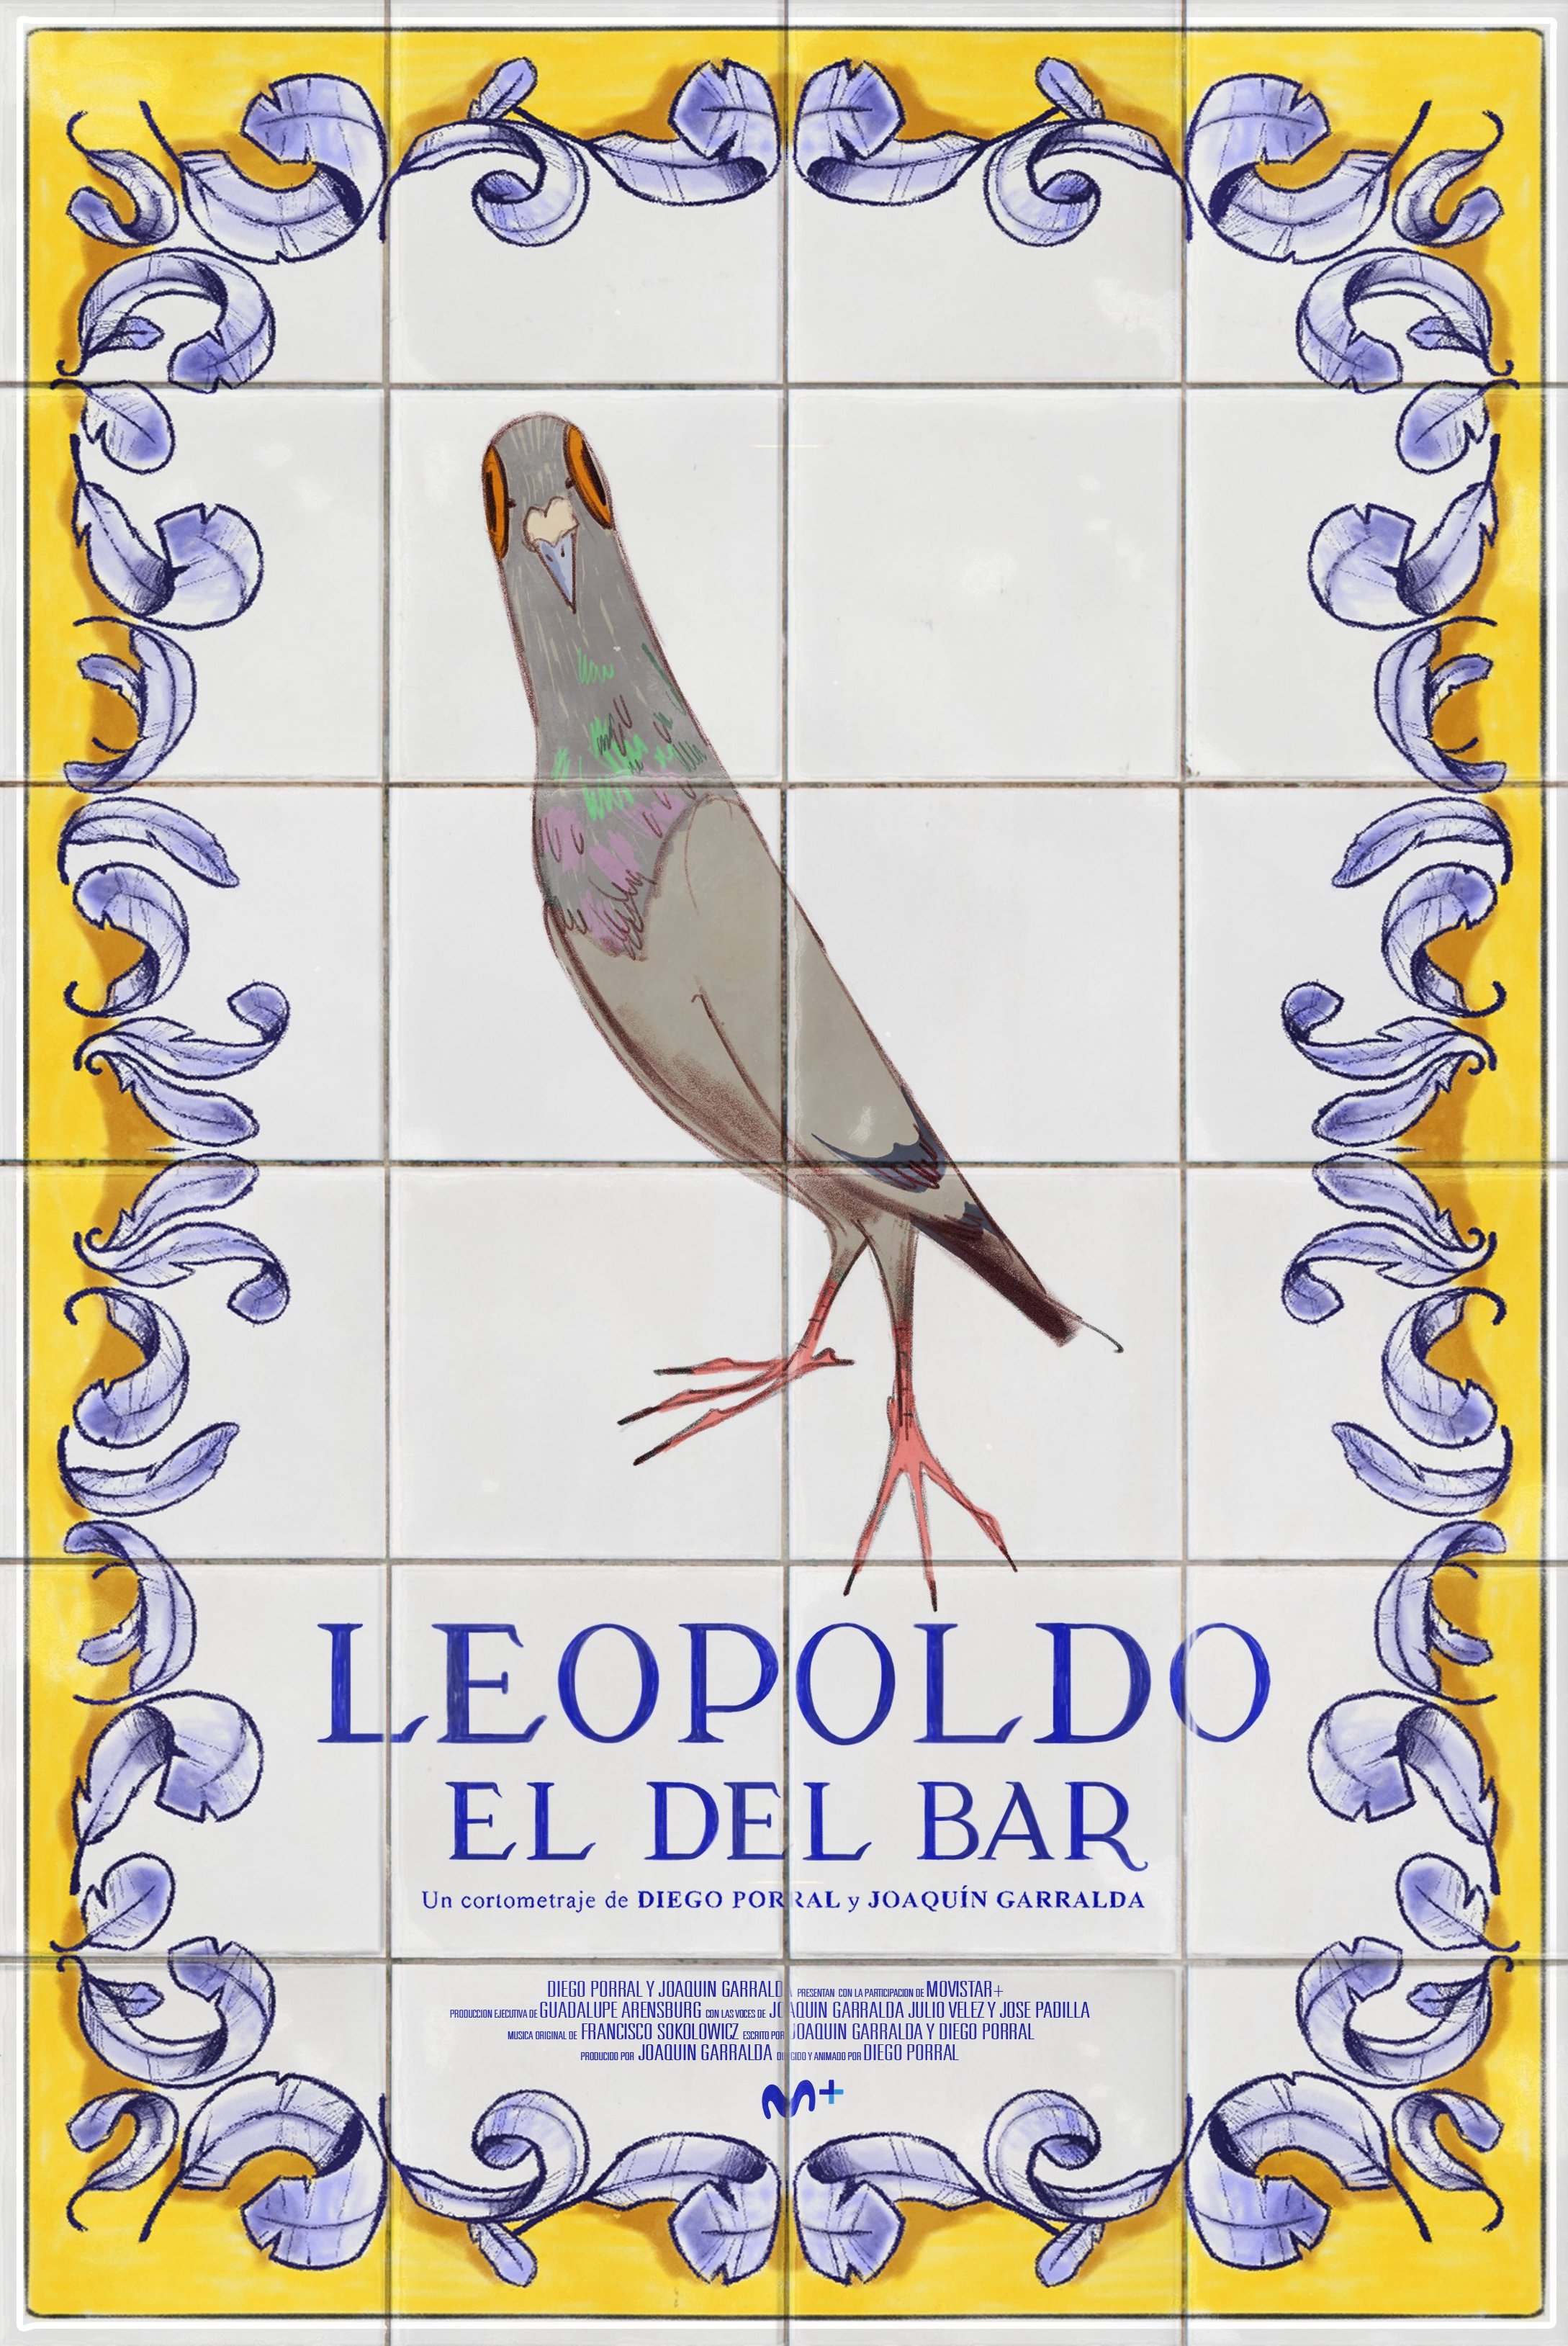 Leopoldo el del bar